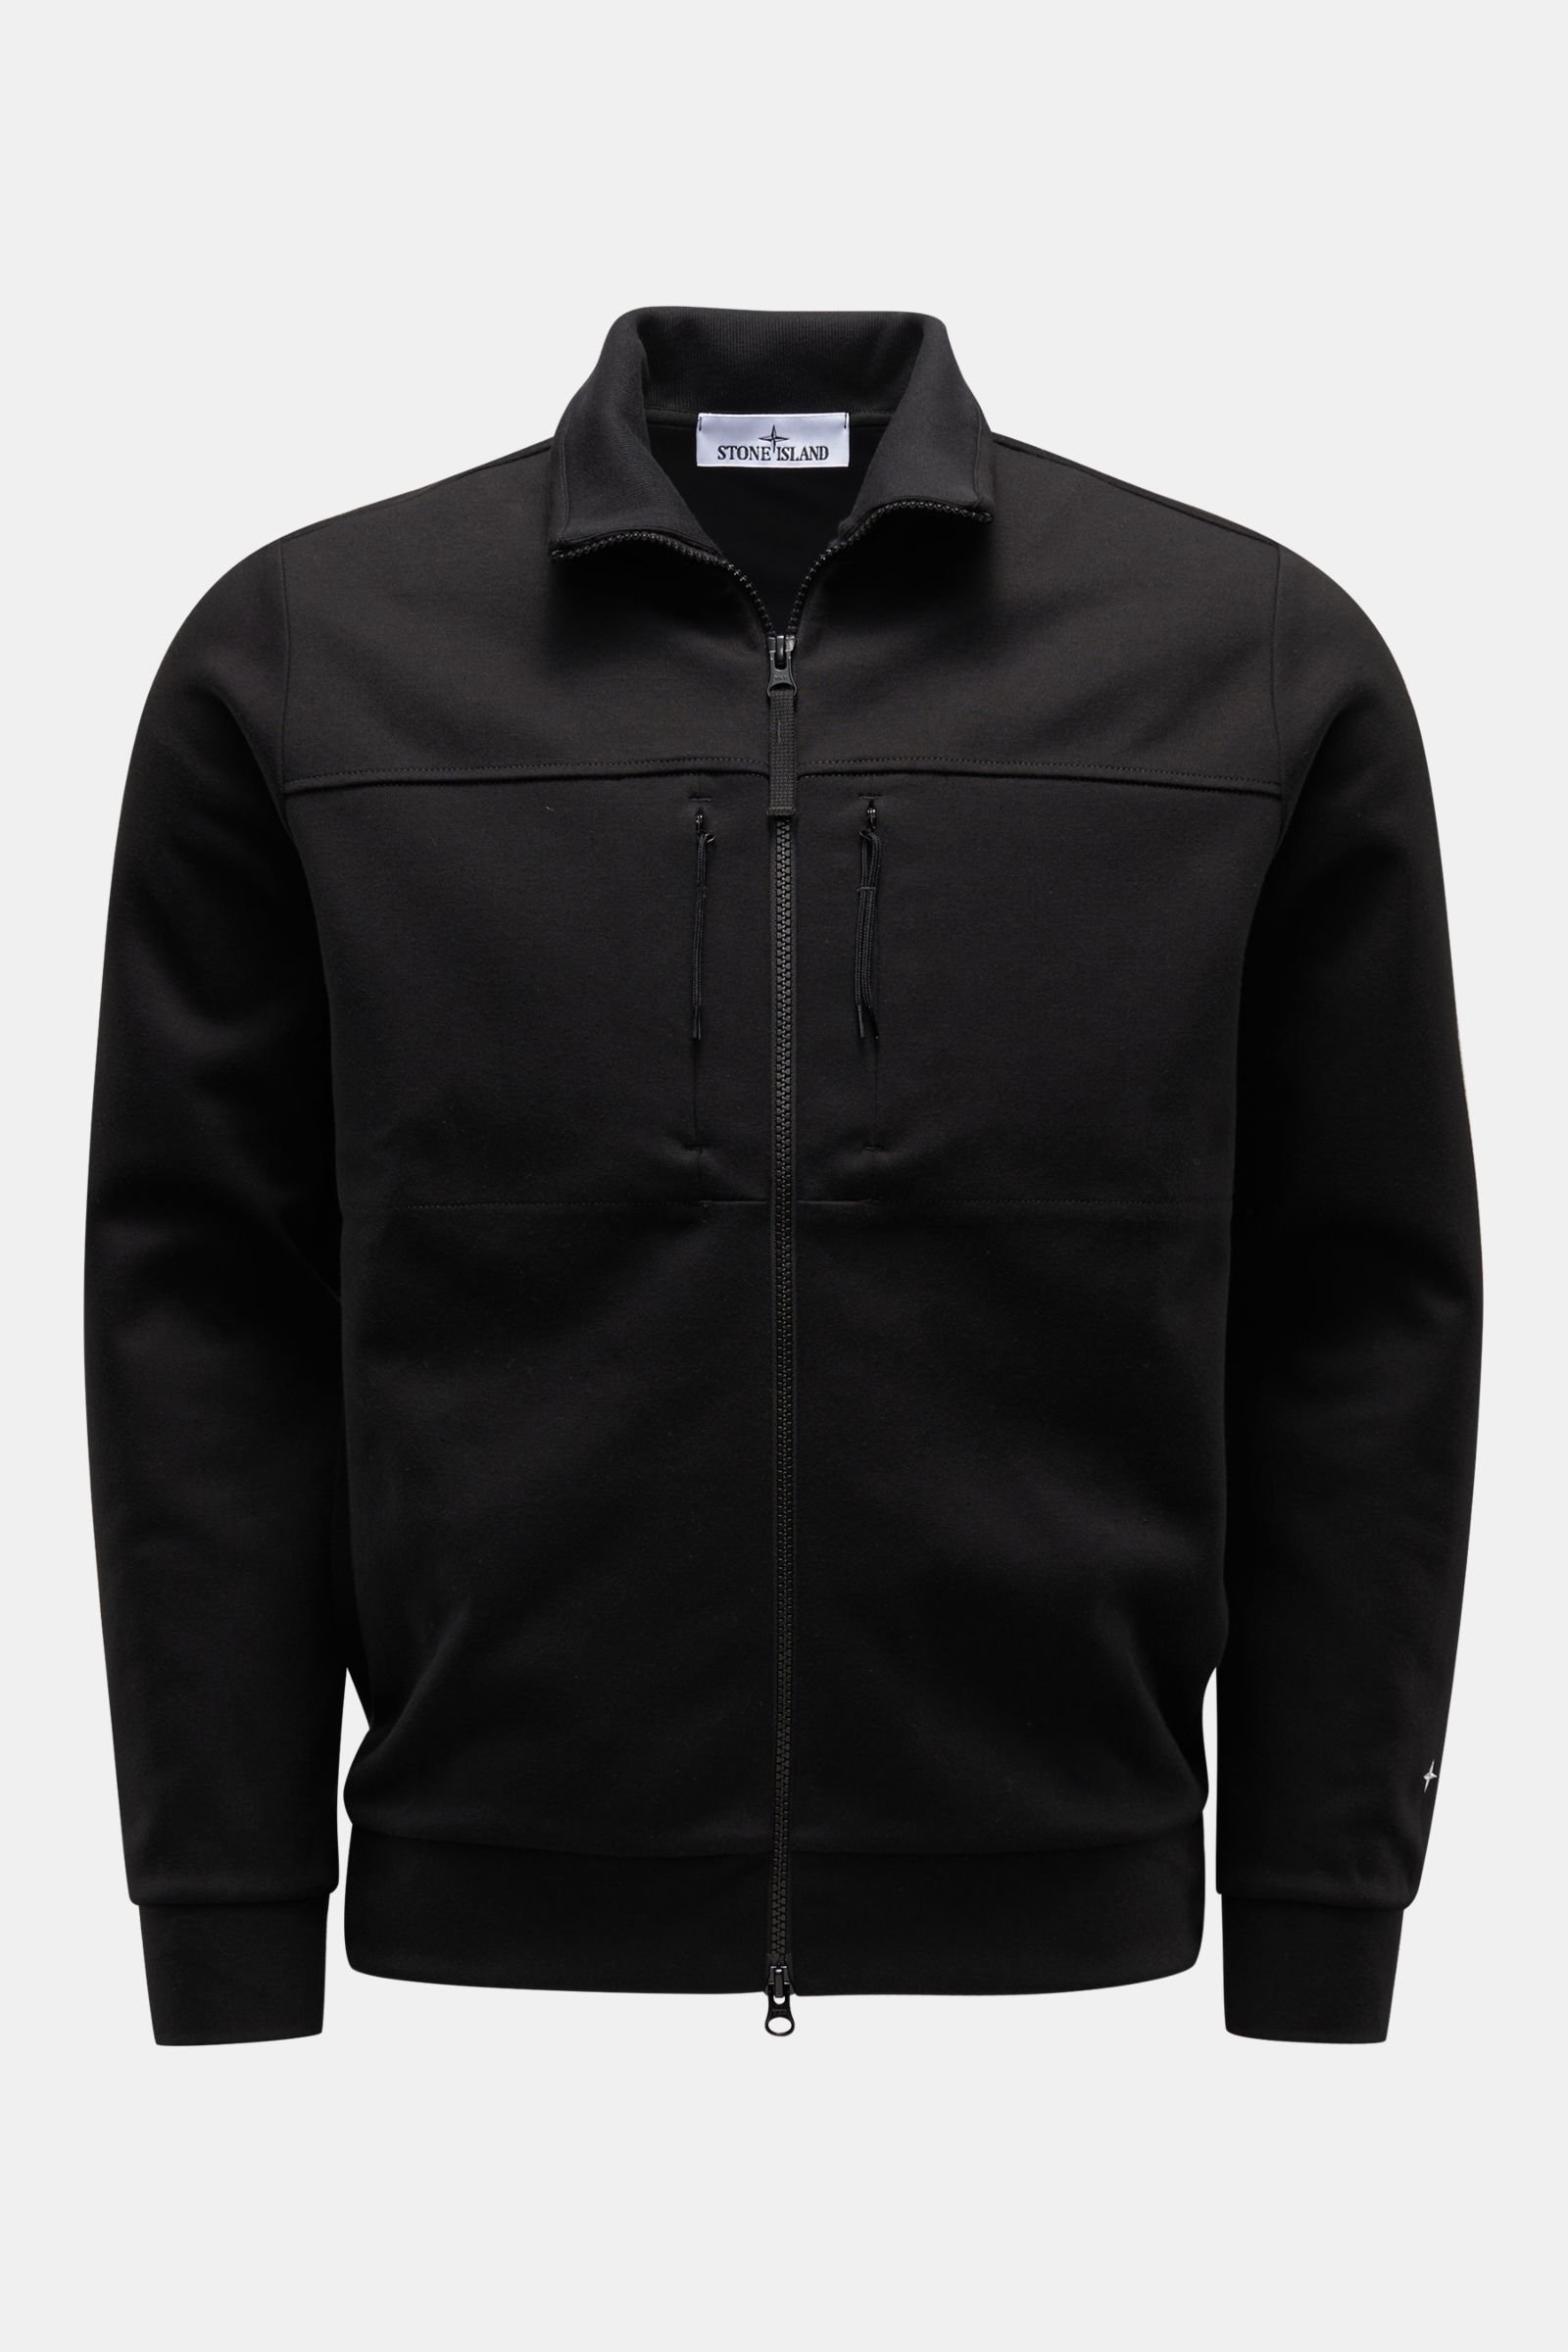 STONE ISLAND sweat jacket 'Stellina' black